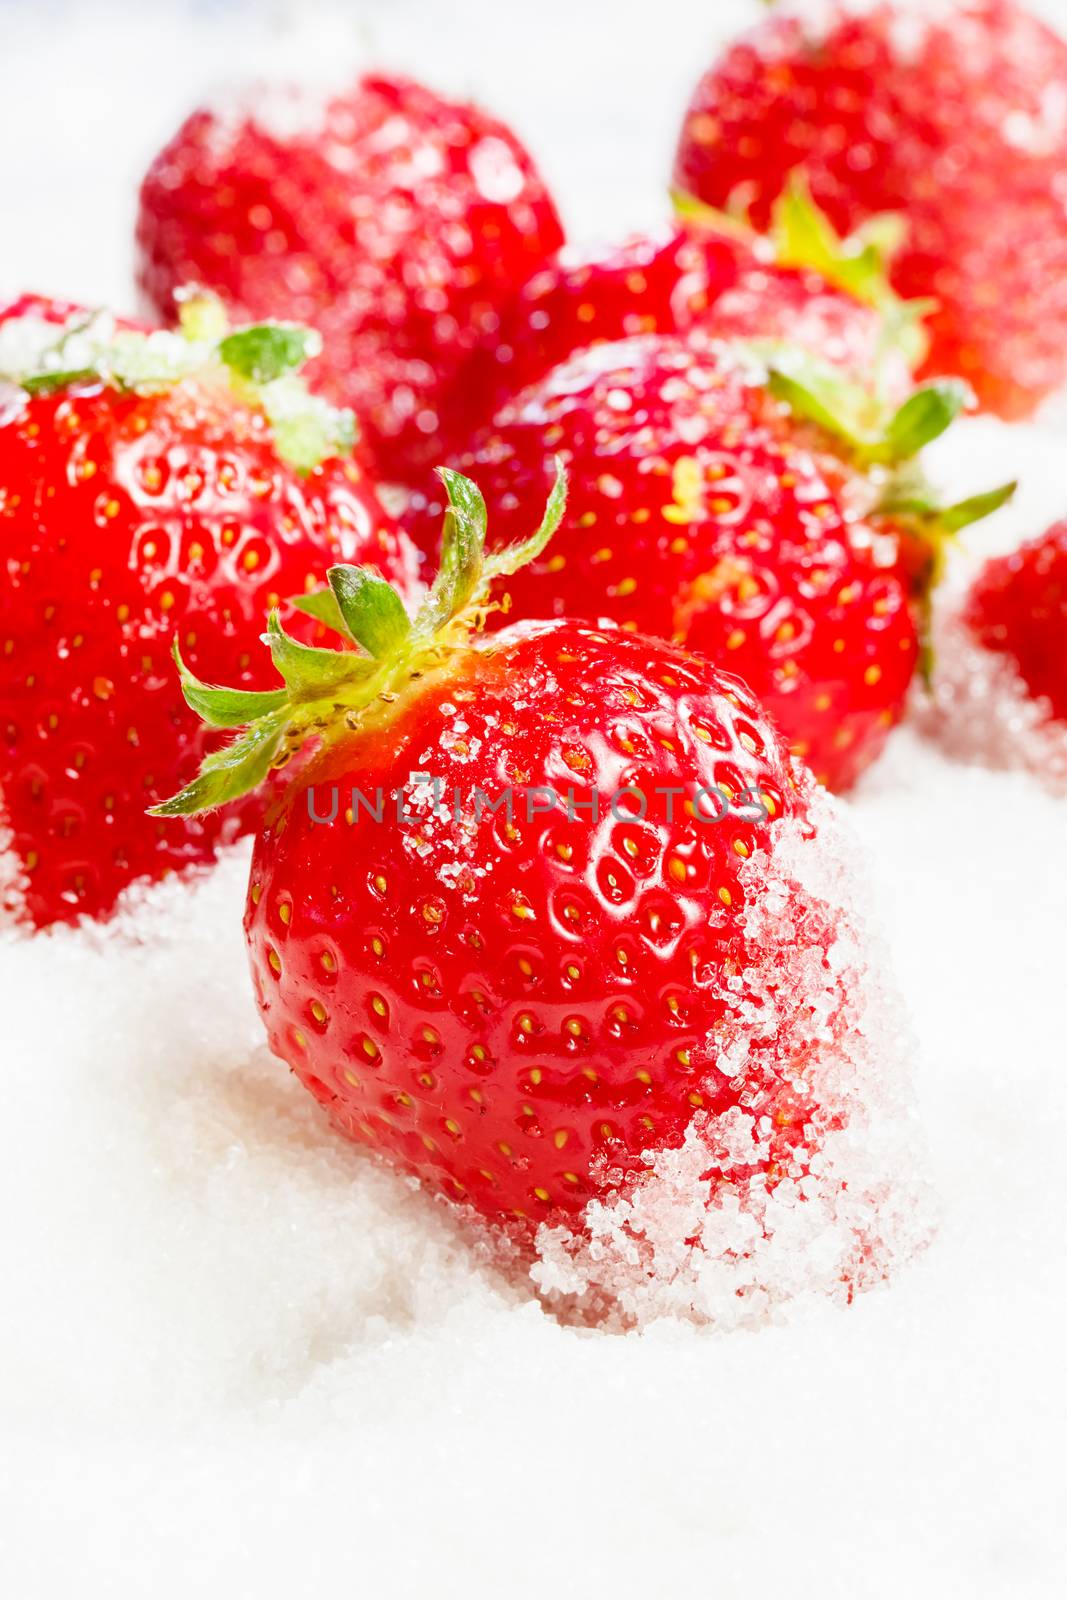 Strawberries with sugar. by Slast20